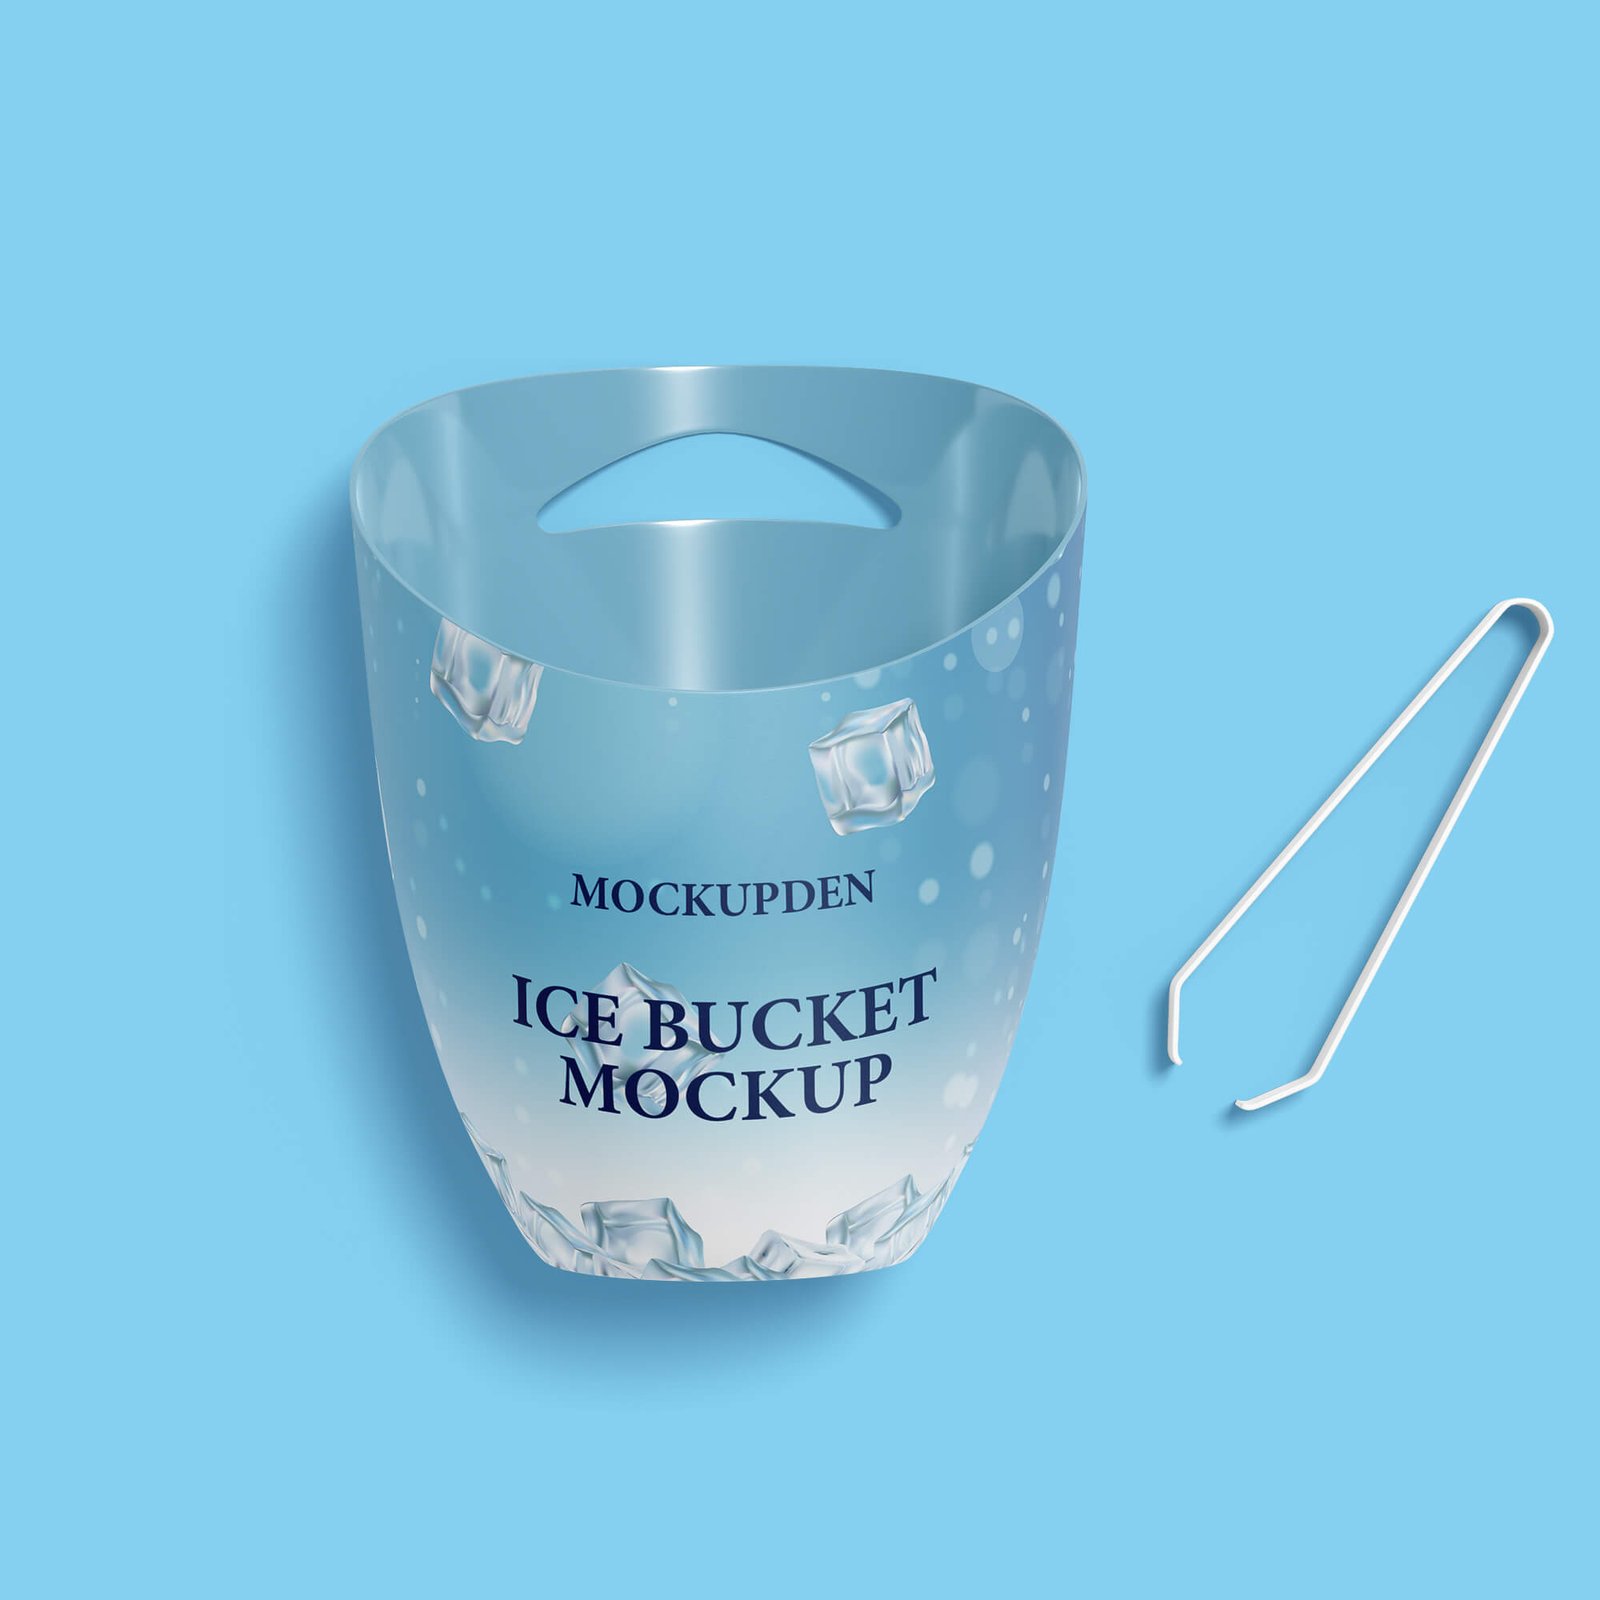 Design Free Ice Bucket Mockup PSD Template